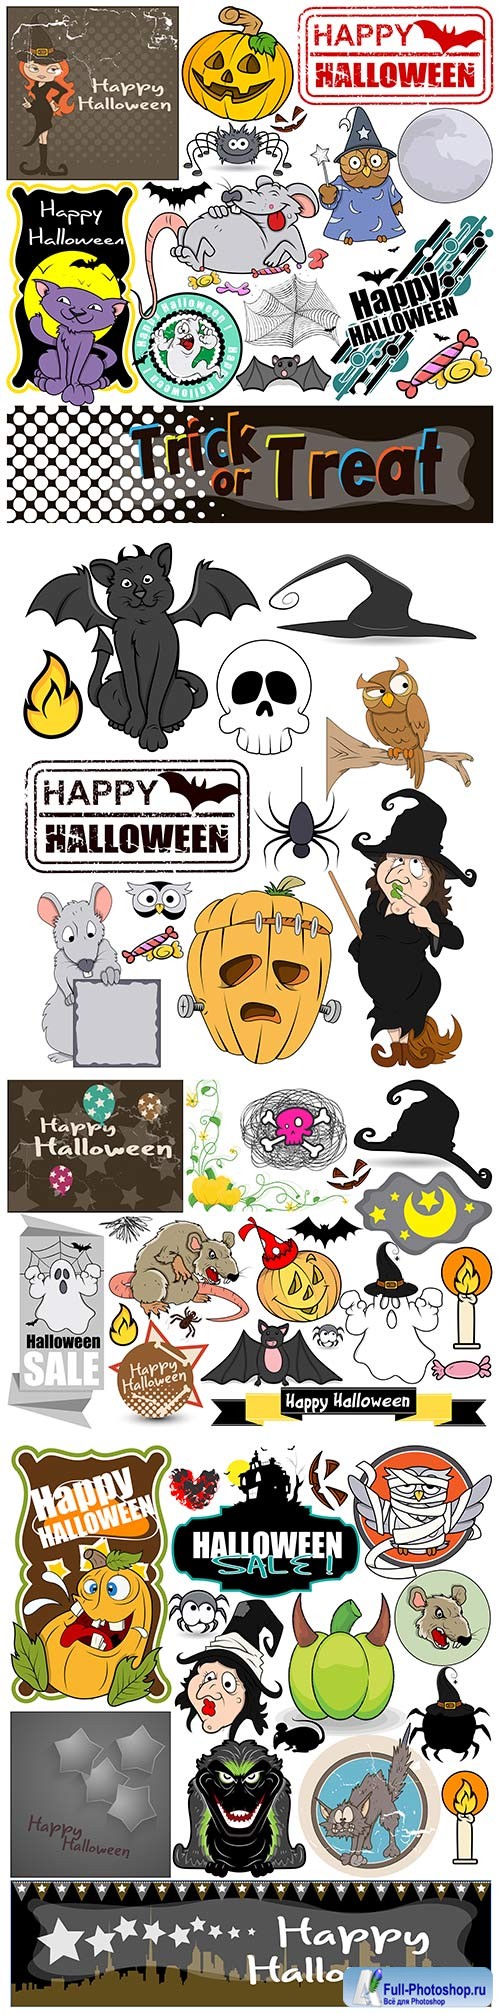 Halloween cartoon characters vector illustration # 2